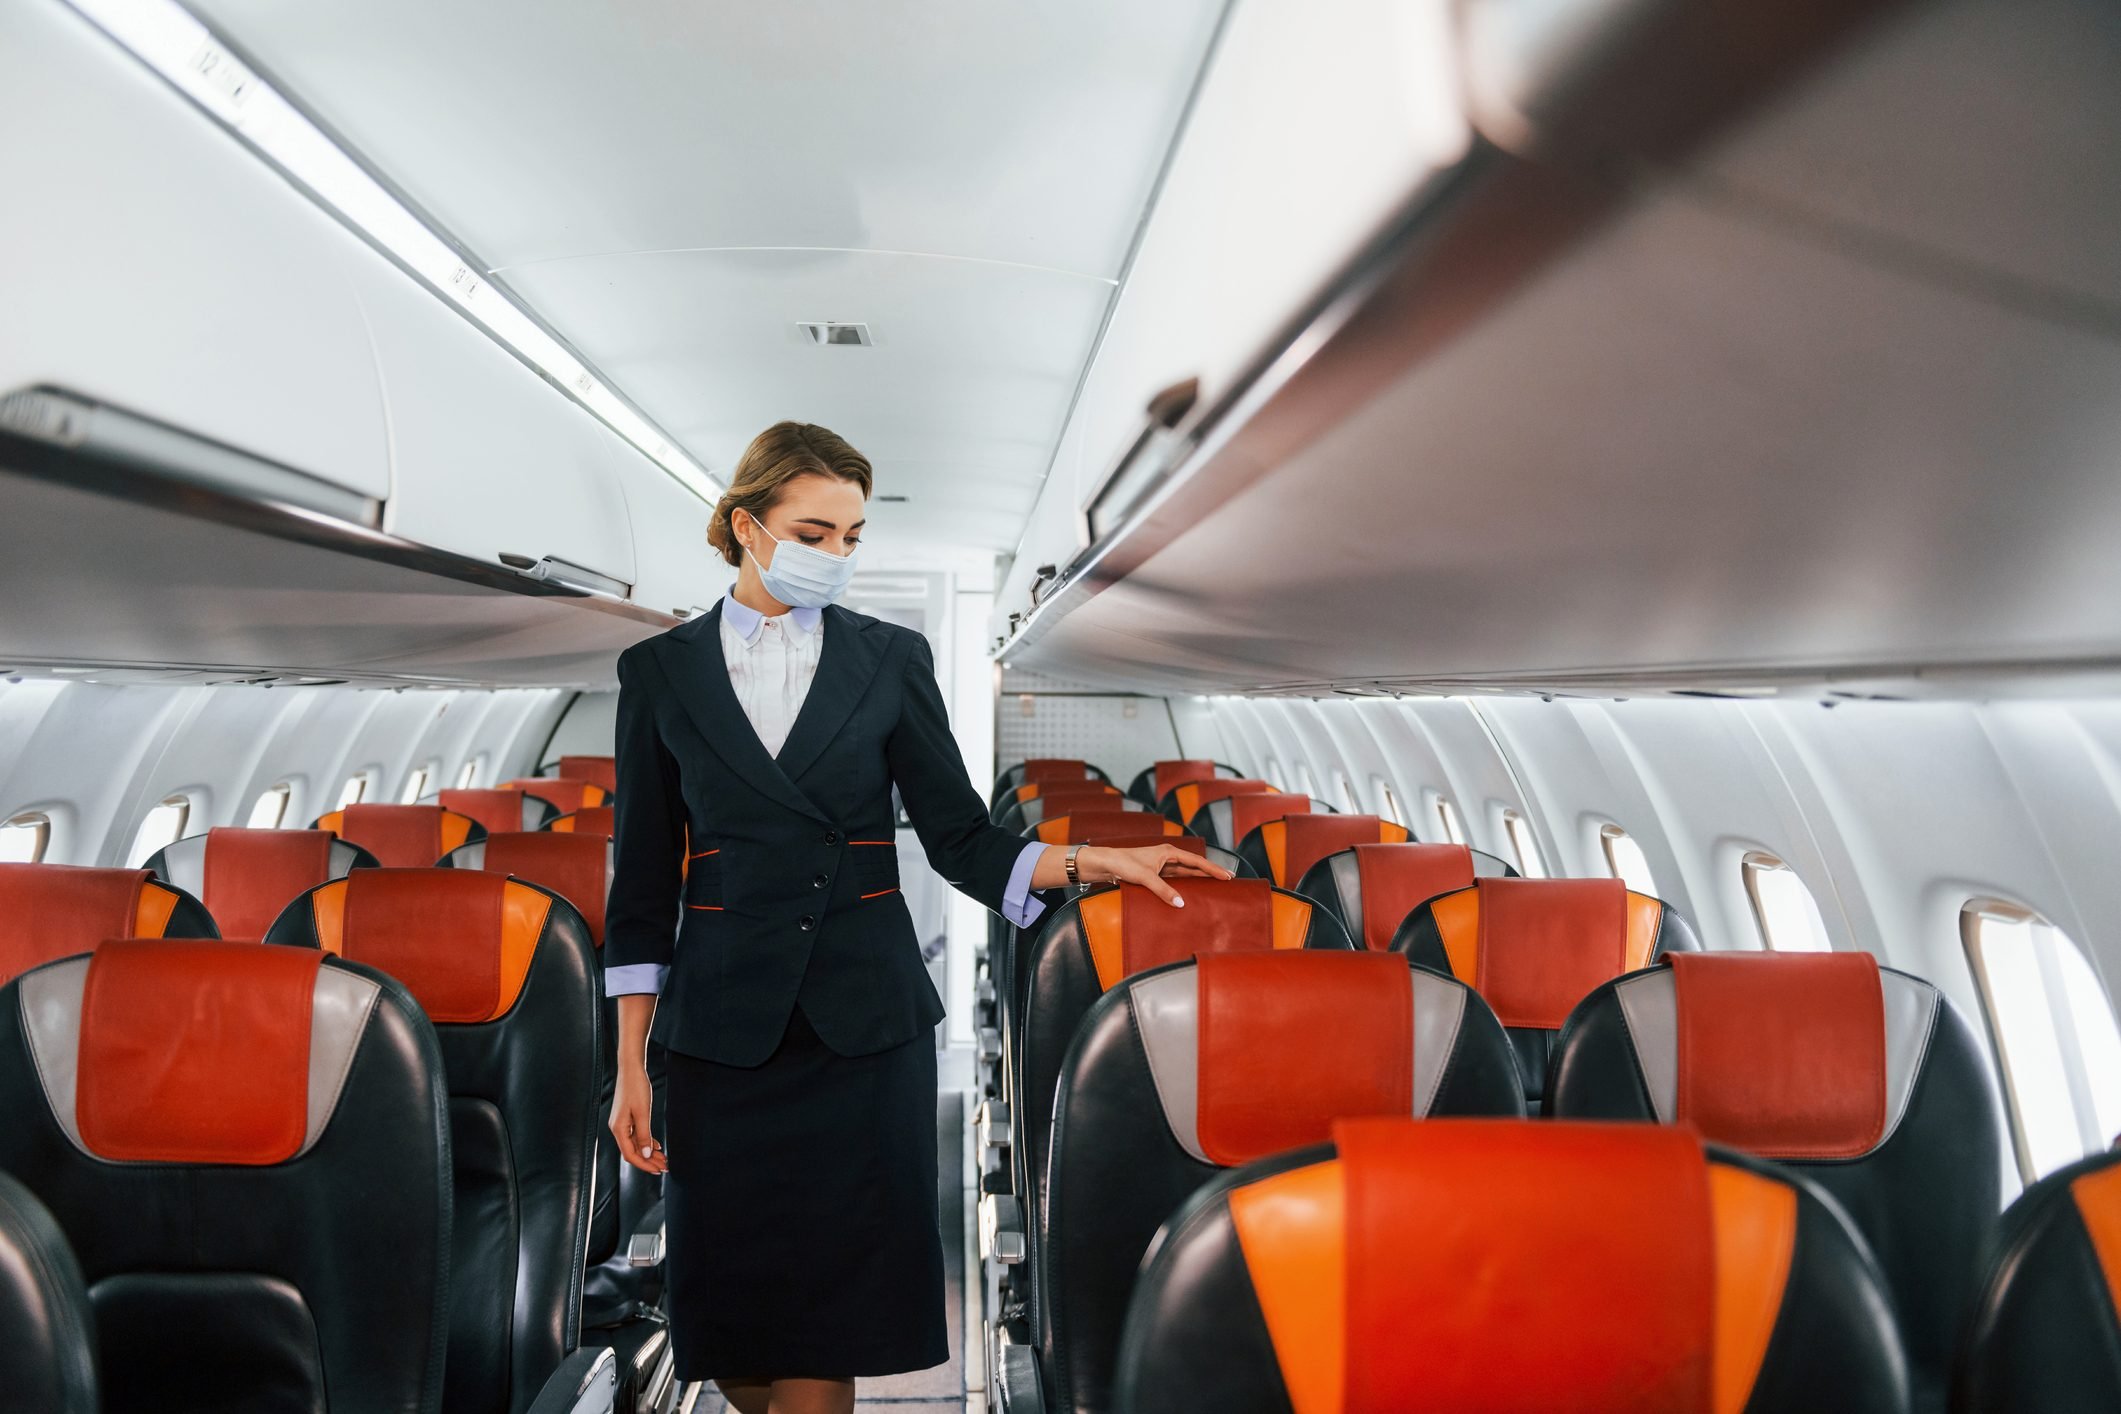 Coronavirus Protection: Seat Pockets Among Dirtiest Places on Plane